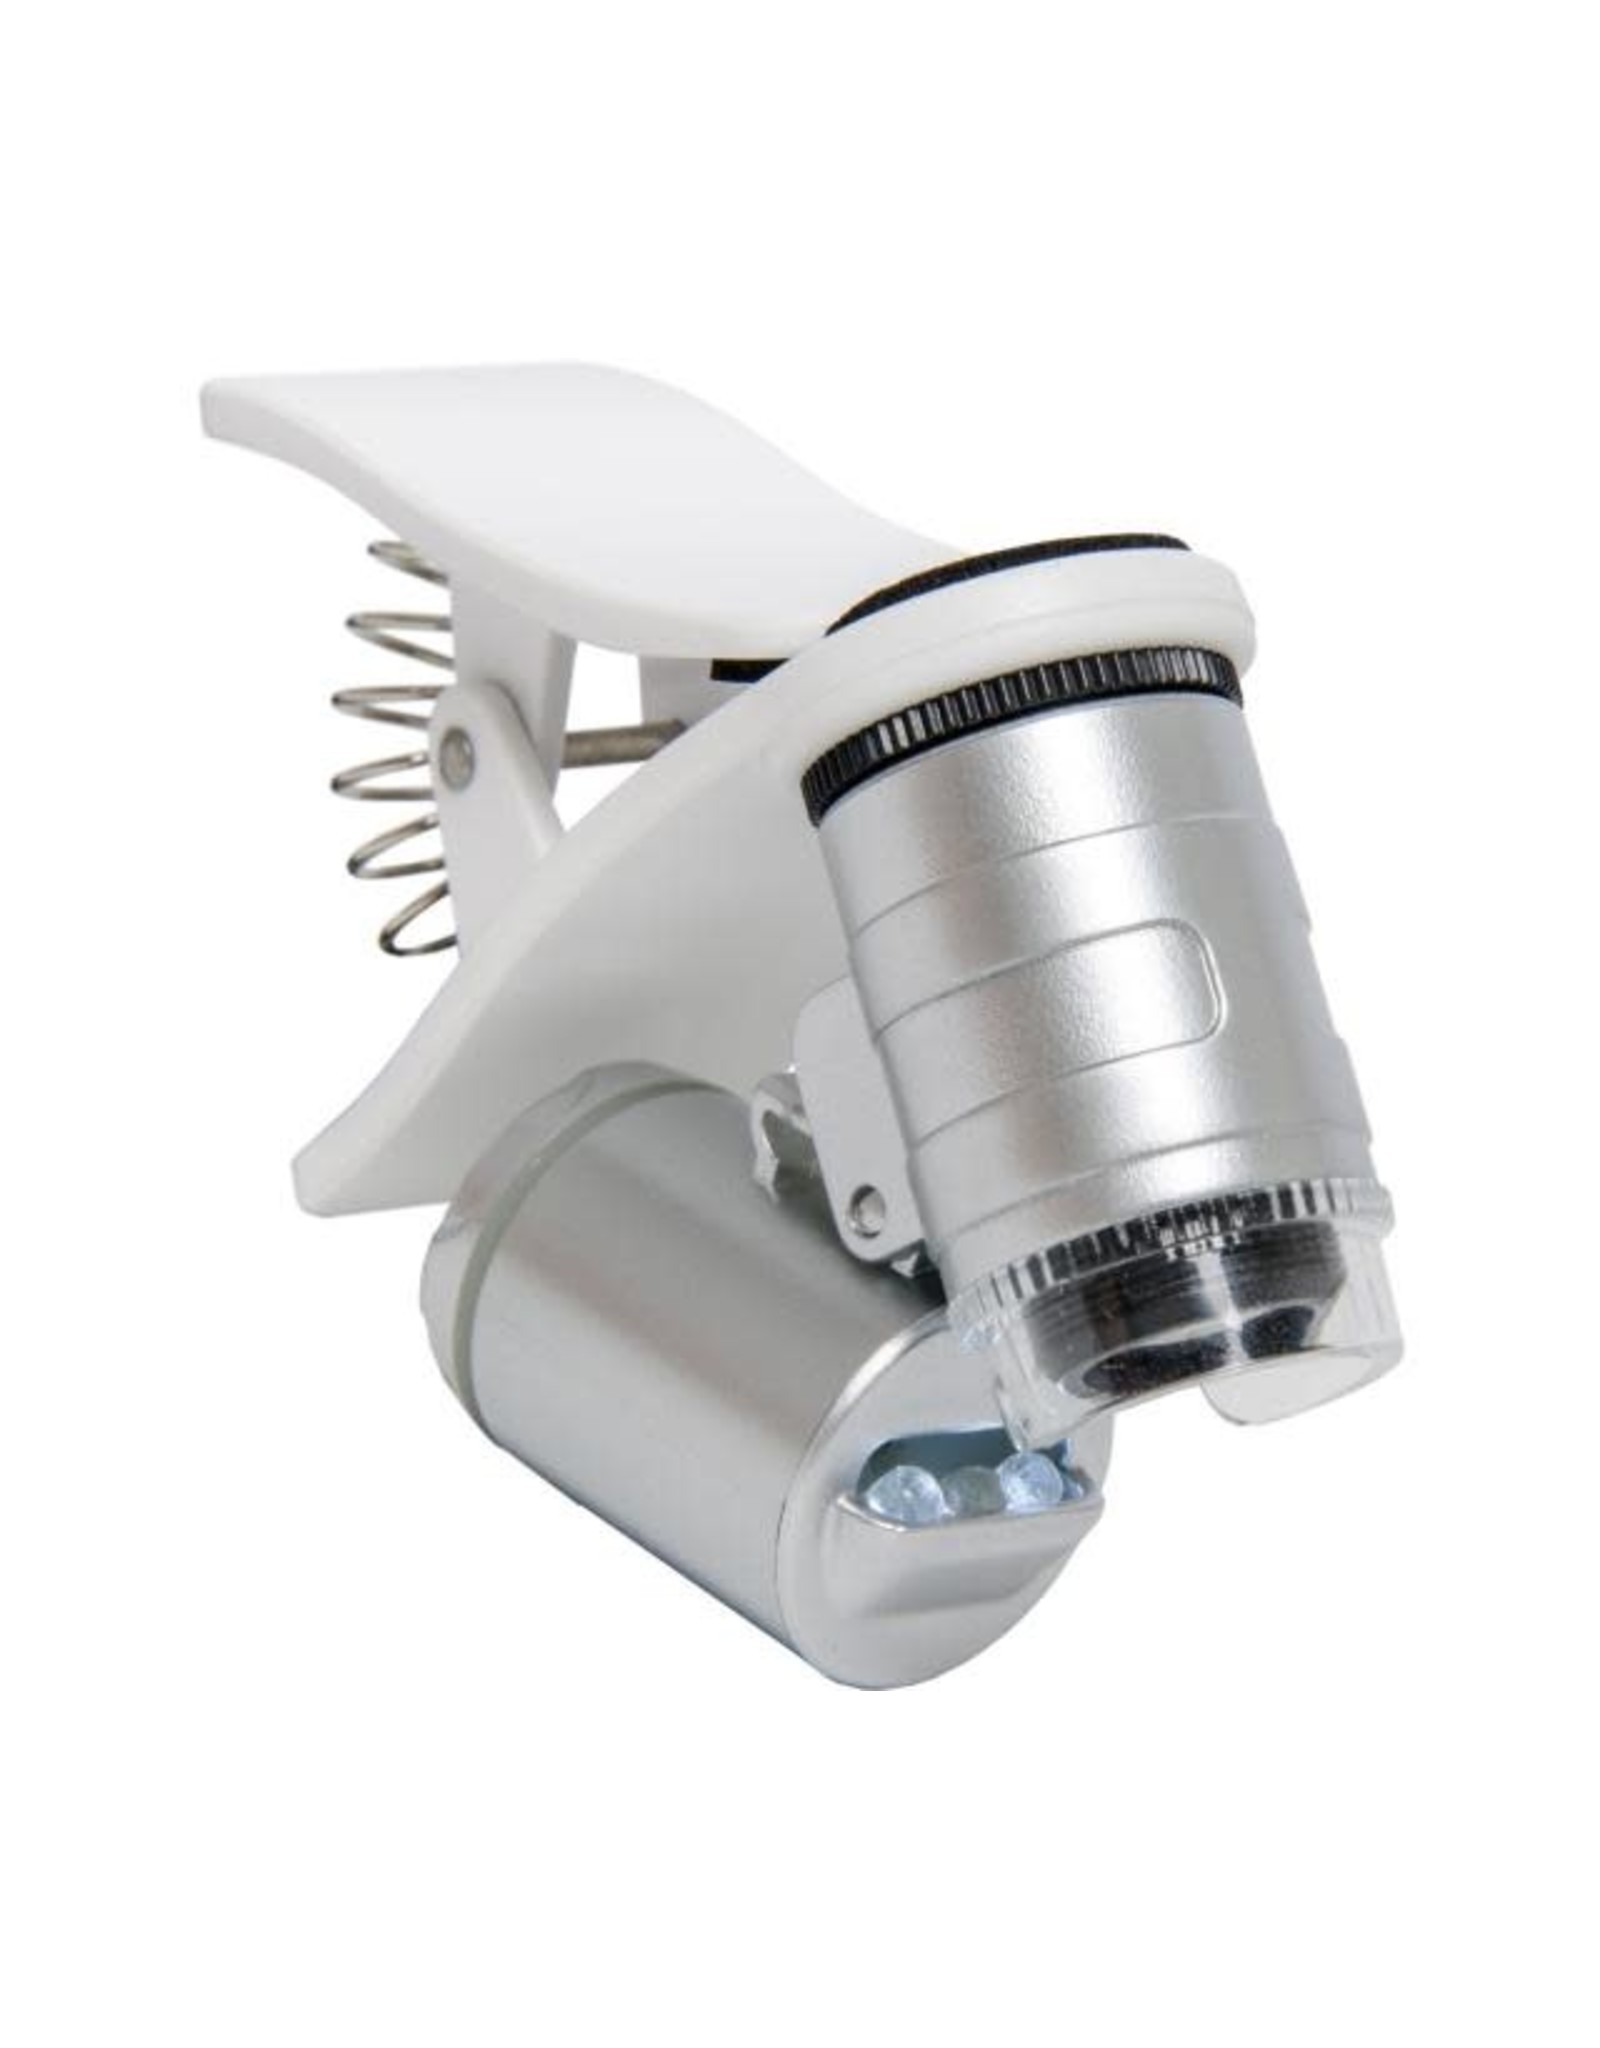 Active Eye Active Eye Universal Phone Microscope 60x w/Clamp